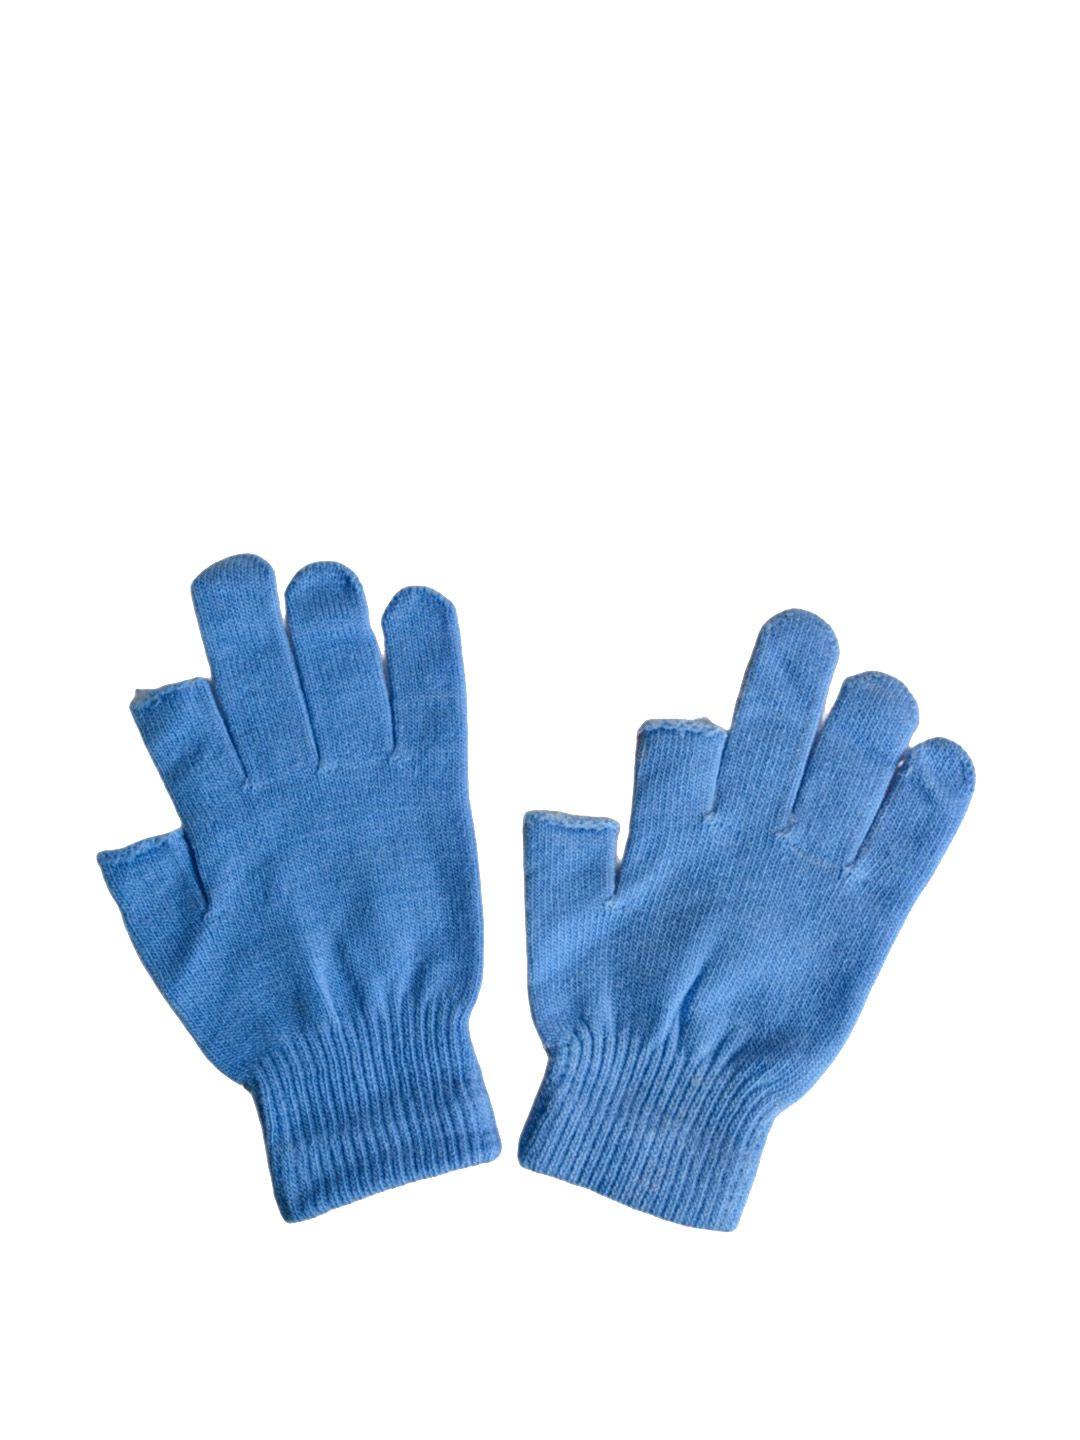 tipy-tipy-tap-girls-two-fingers-cut-woolen-winter-gloves